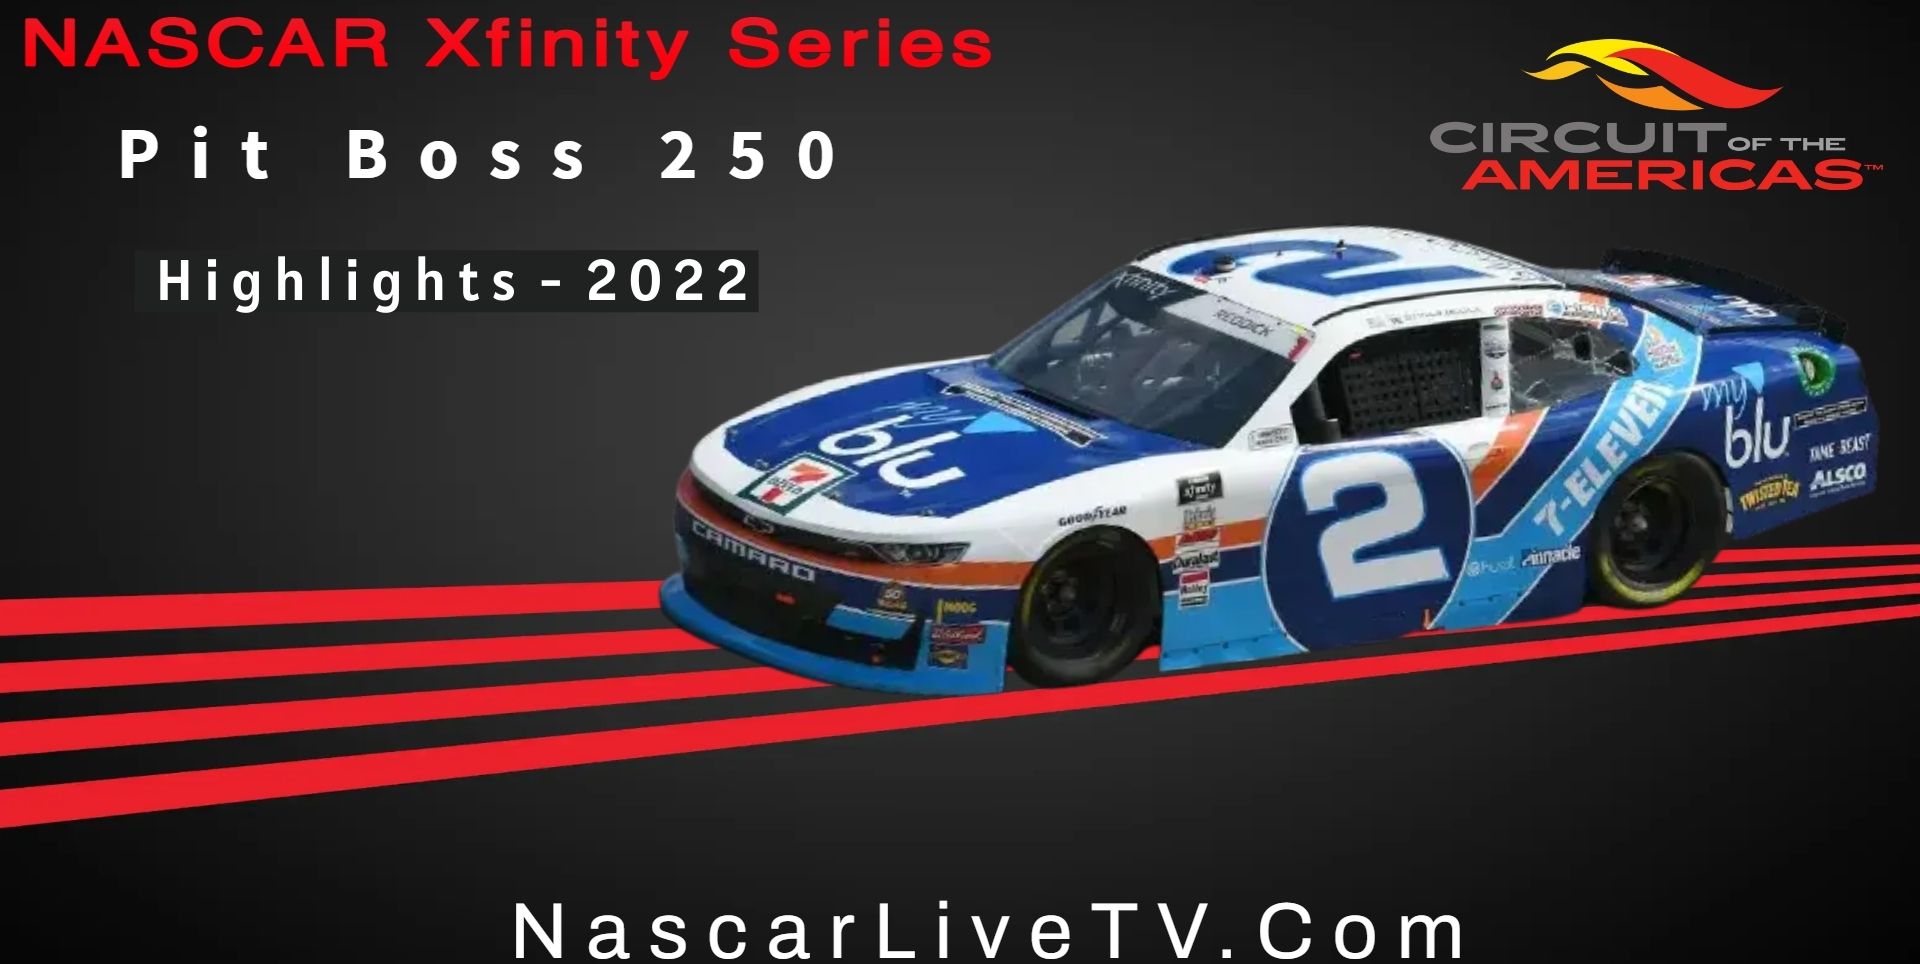 Pit Boss 250 Highlights NASCAR Xfinity Series 2022